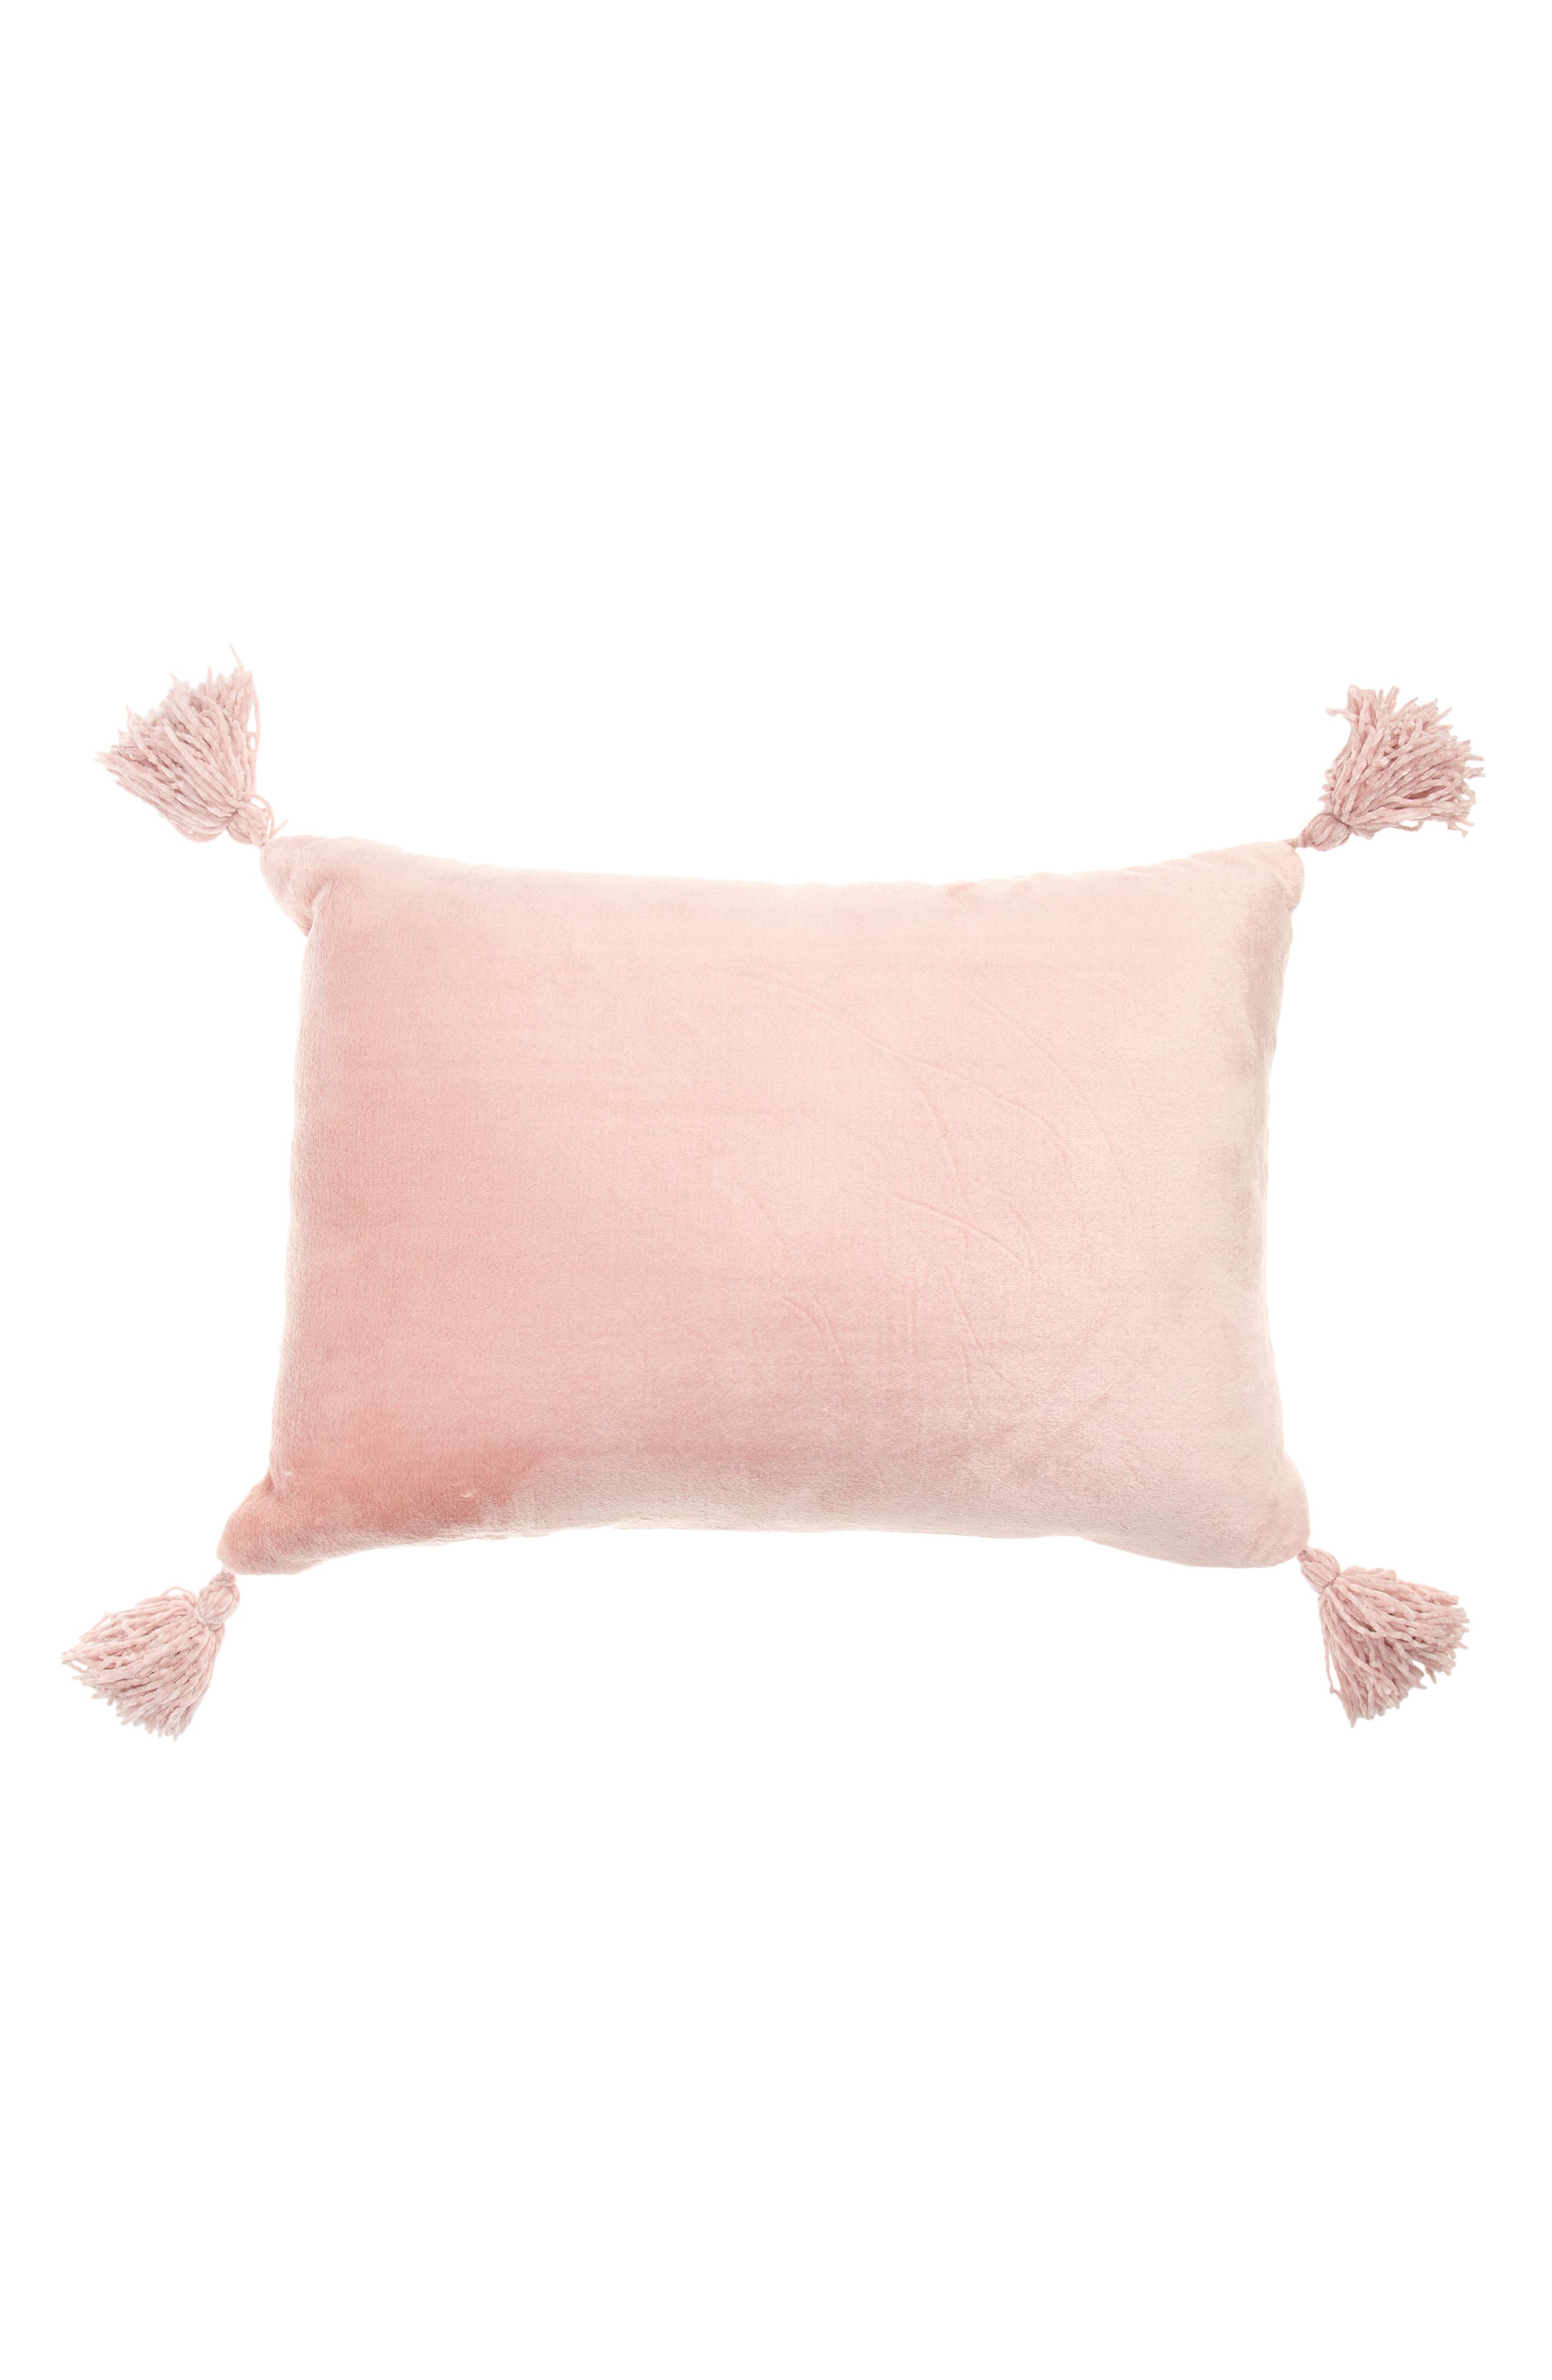 Decorative Pillows | Nordstrom